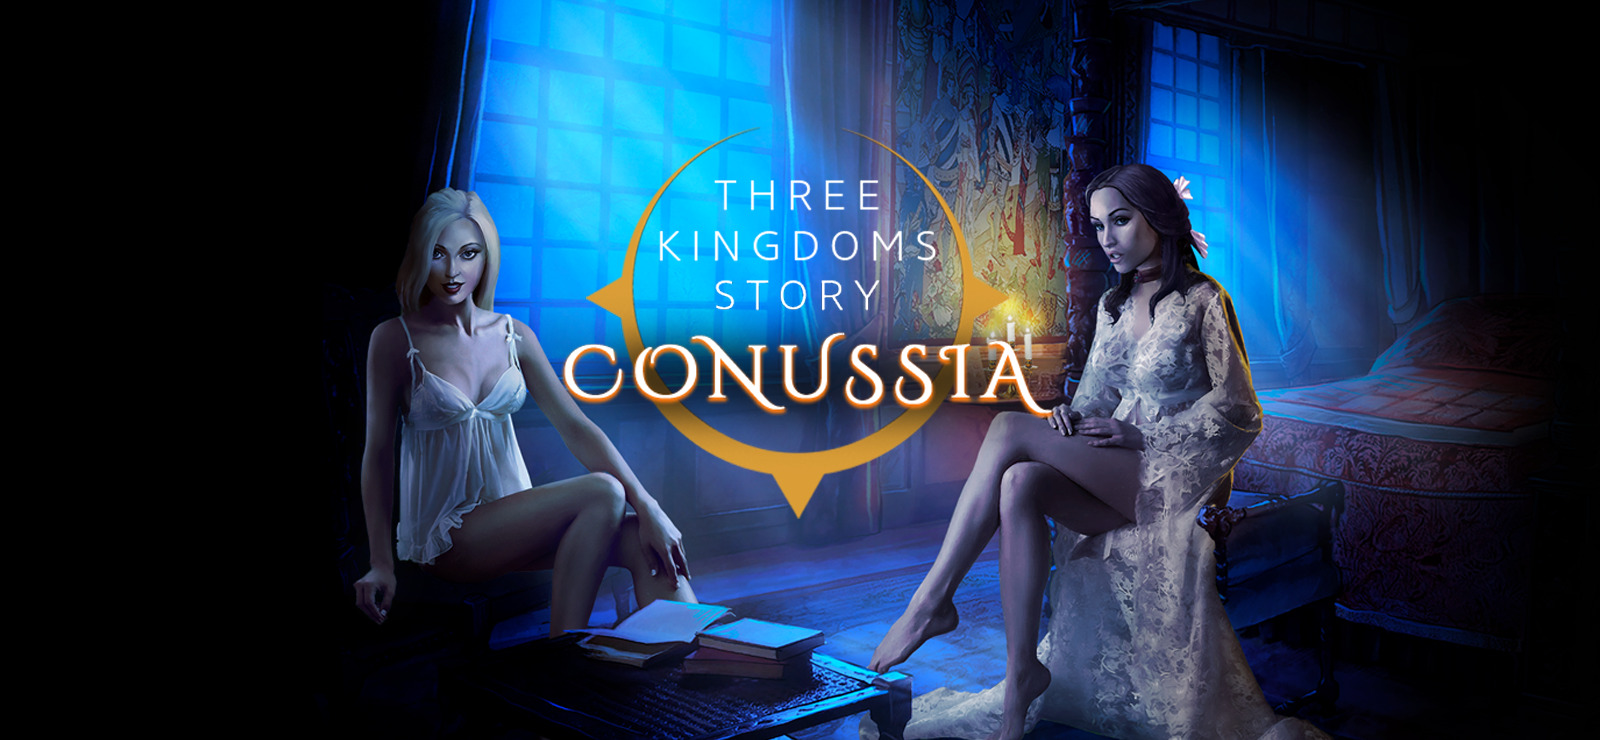 Three kingdoms story conussia